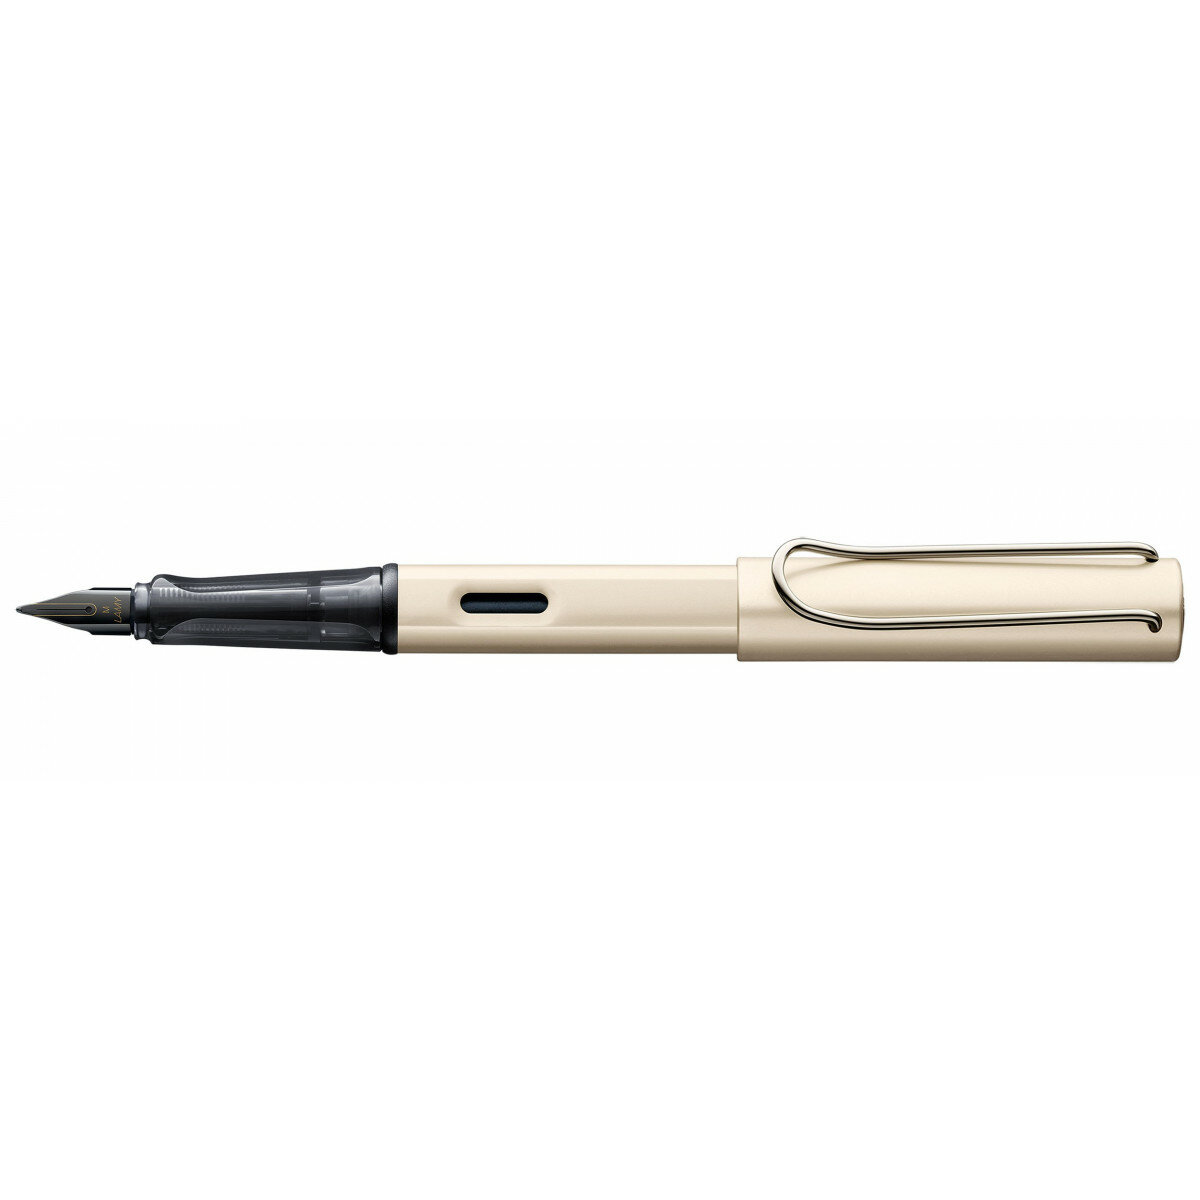 Перьевая ручка Lamy Lx Palladium перо F (4031498)